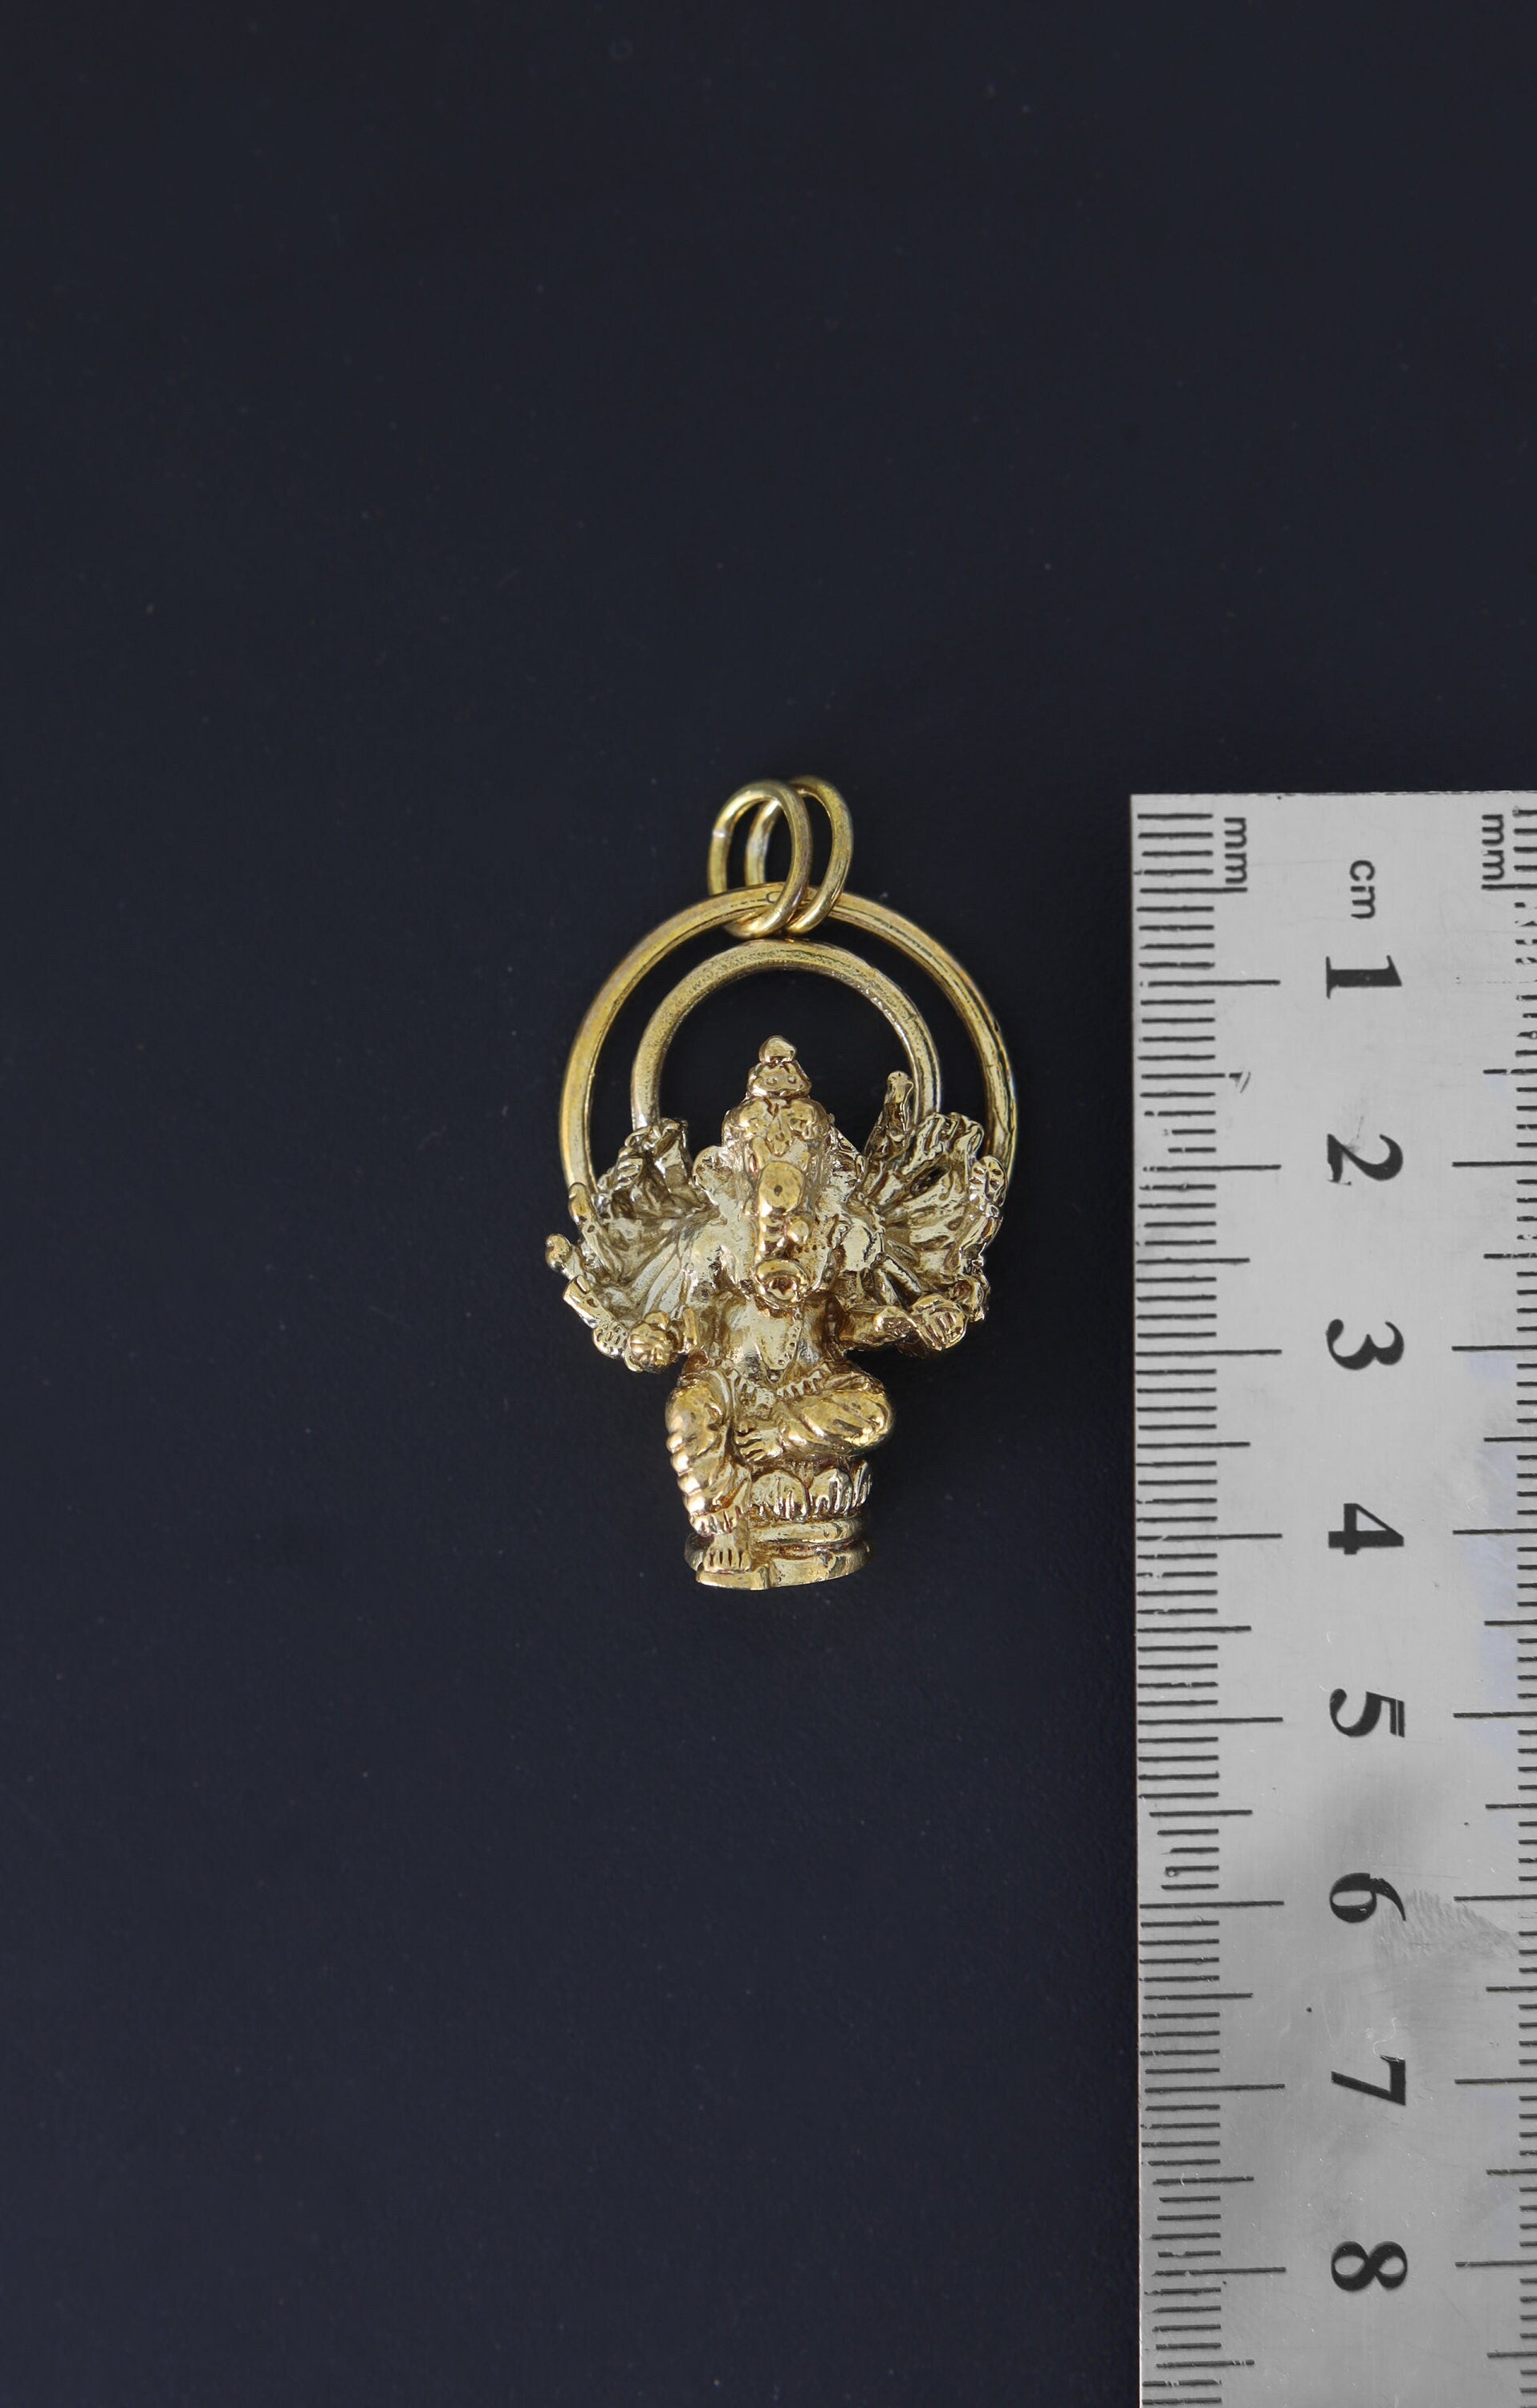 Cast Pendant with Sitting Ganesha Halo Talisman, Gold Plated Brass Charm, Abundance & Protection, Hindu Symbolic Jewelry